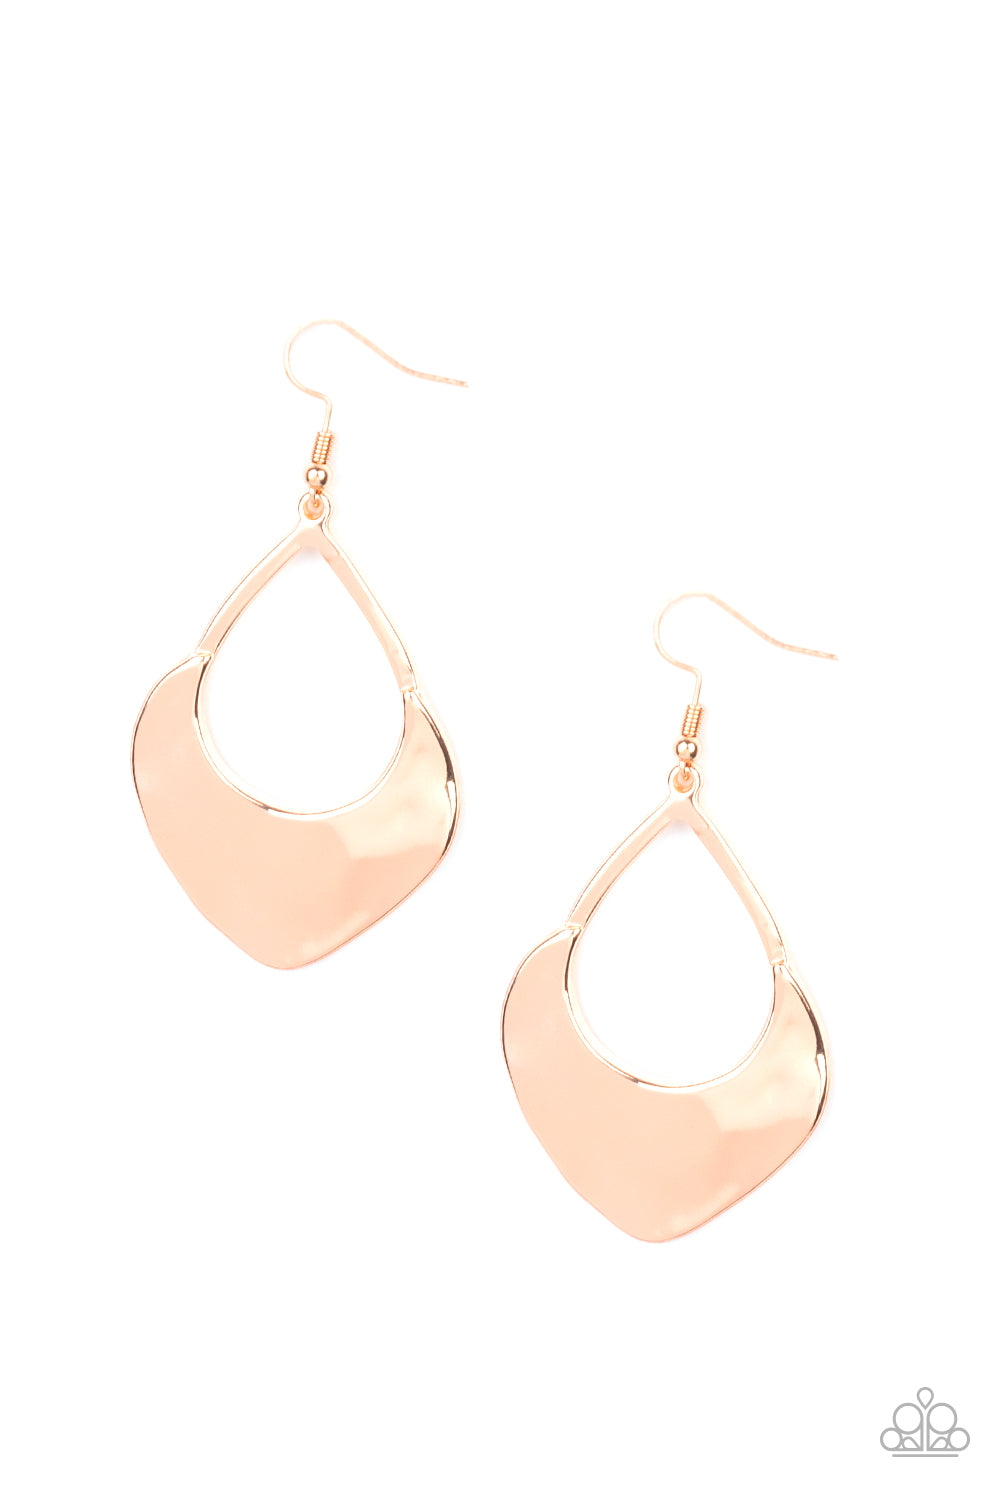 Dig Your Heels In - Rose Gold Earrings